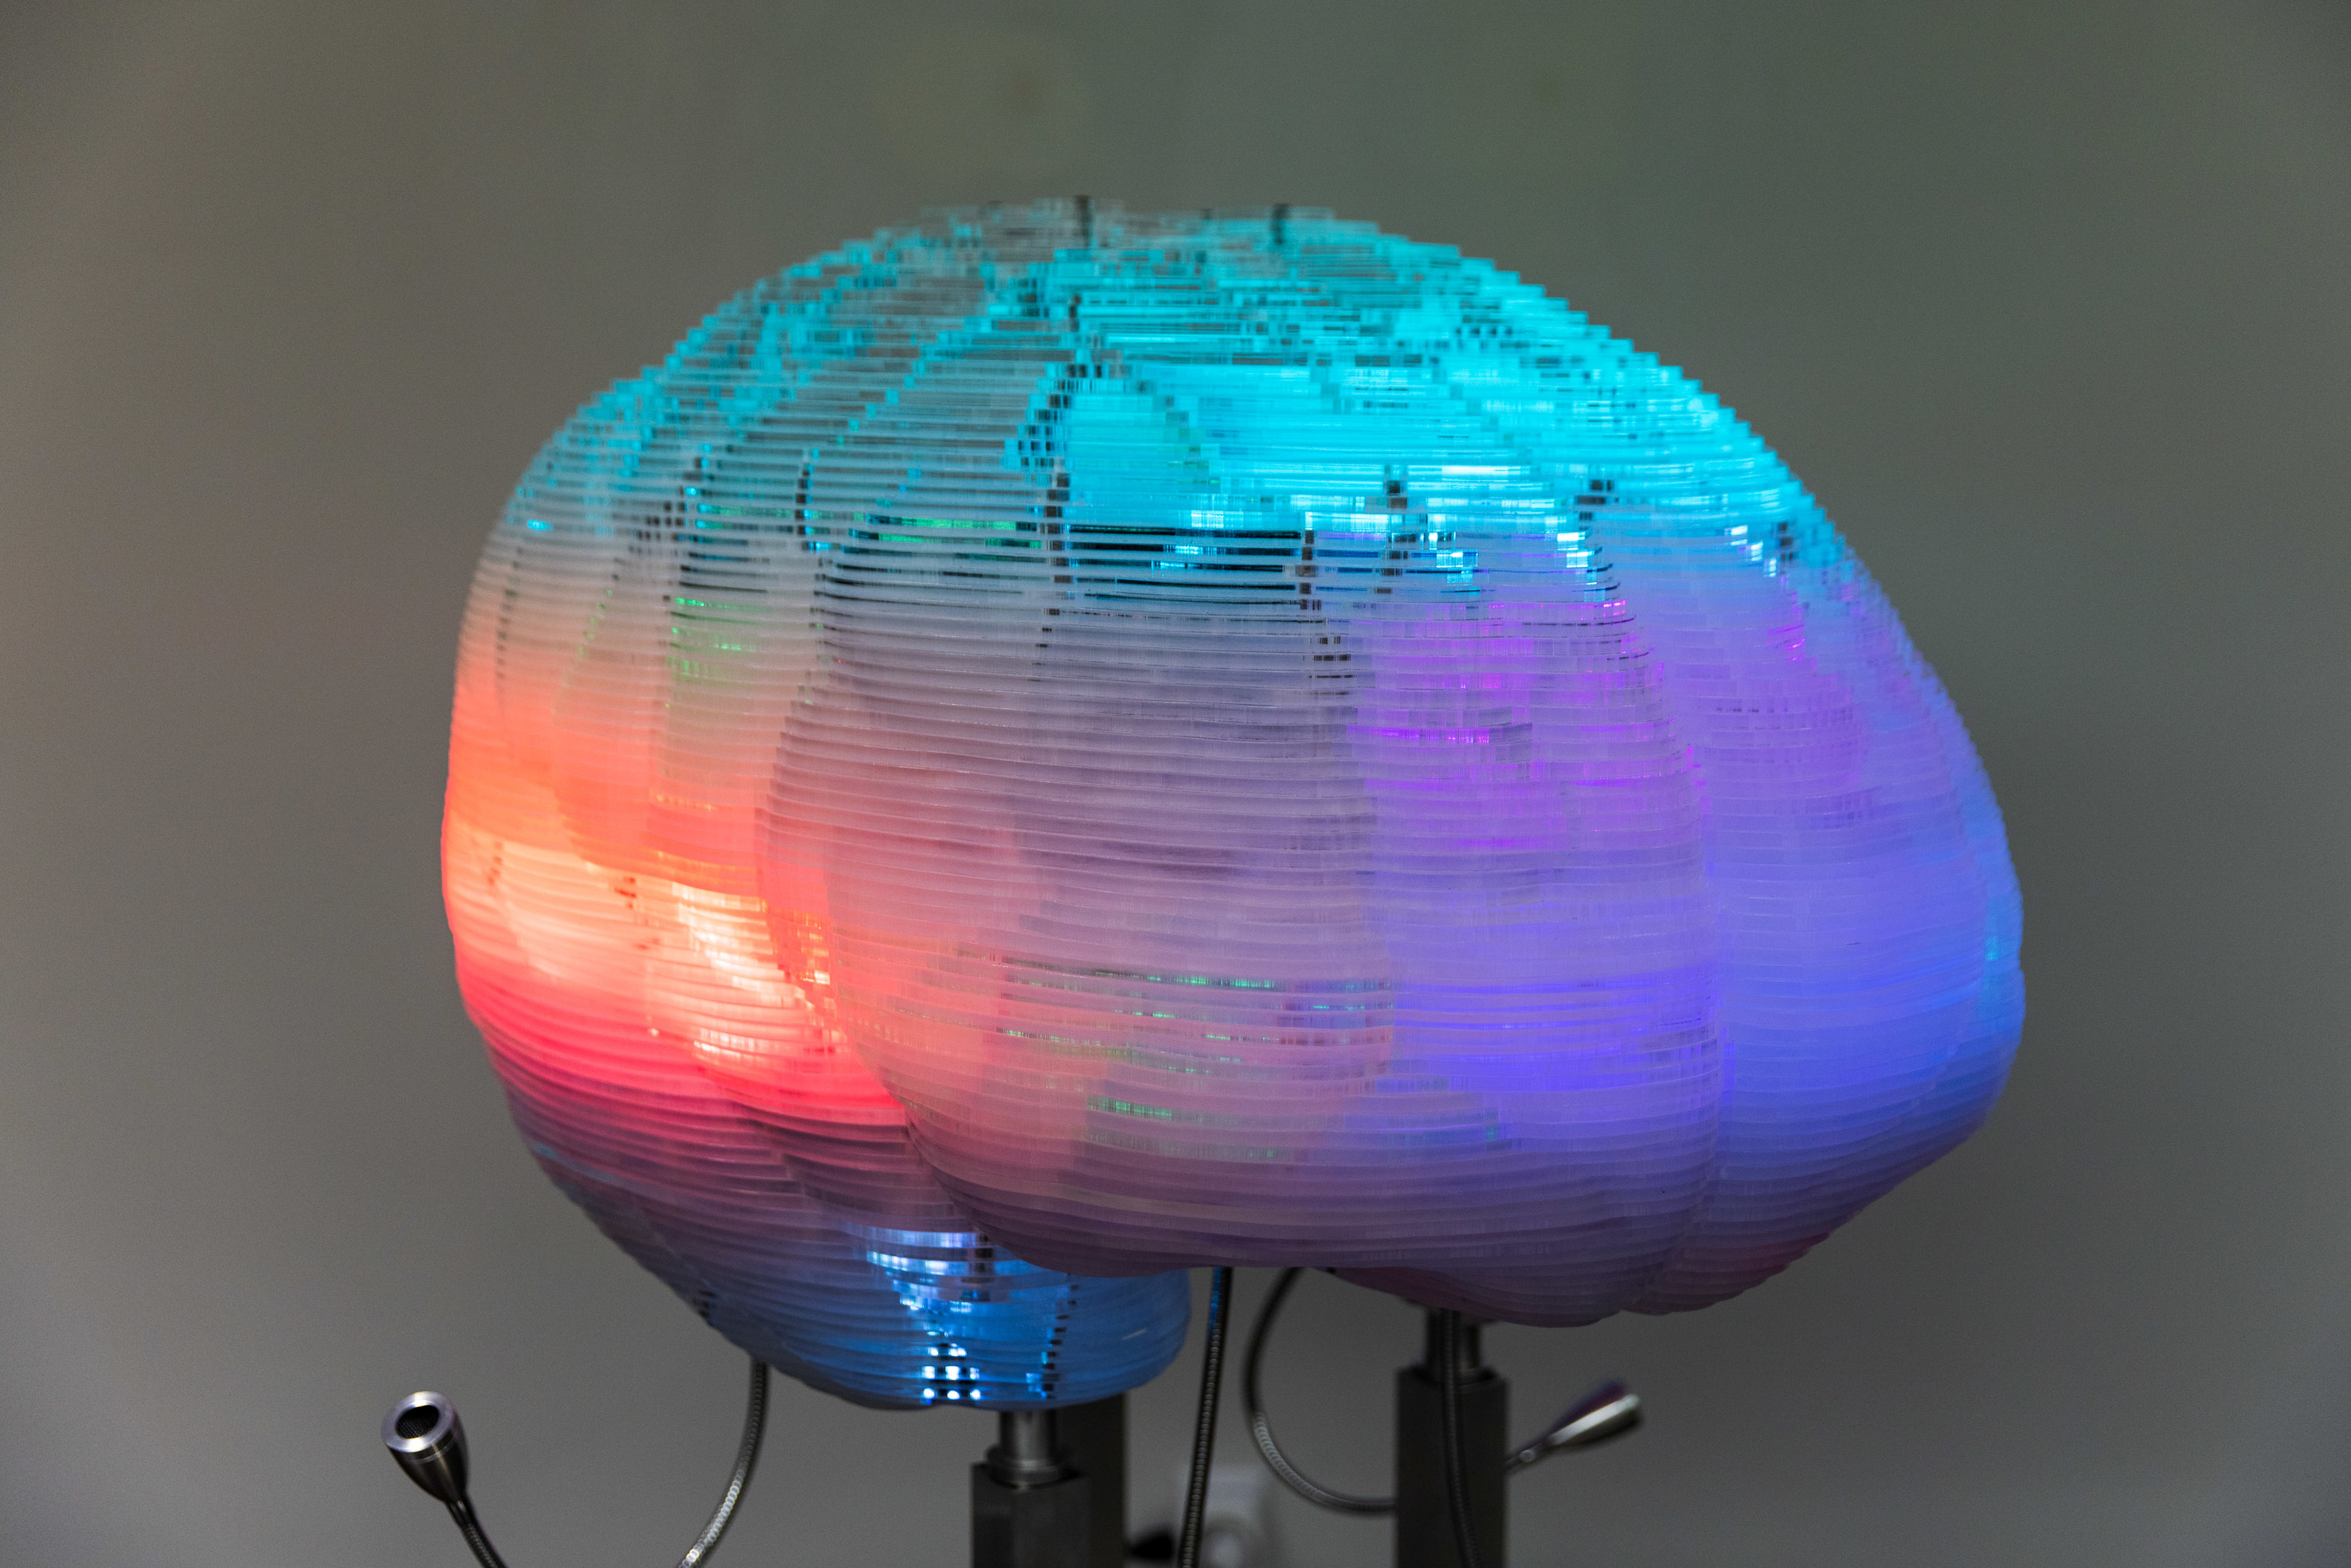 LED human brain model by Daniel Miller